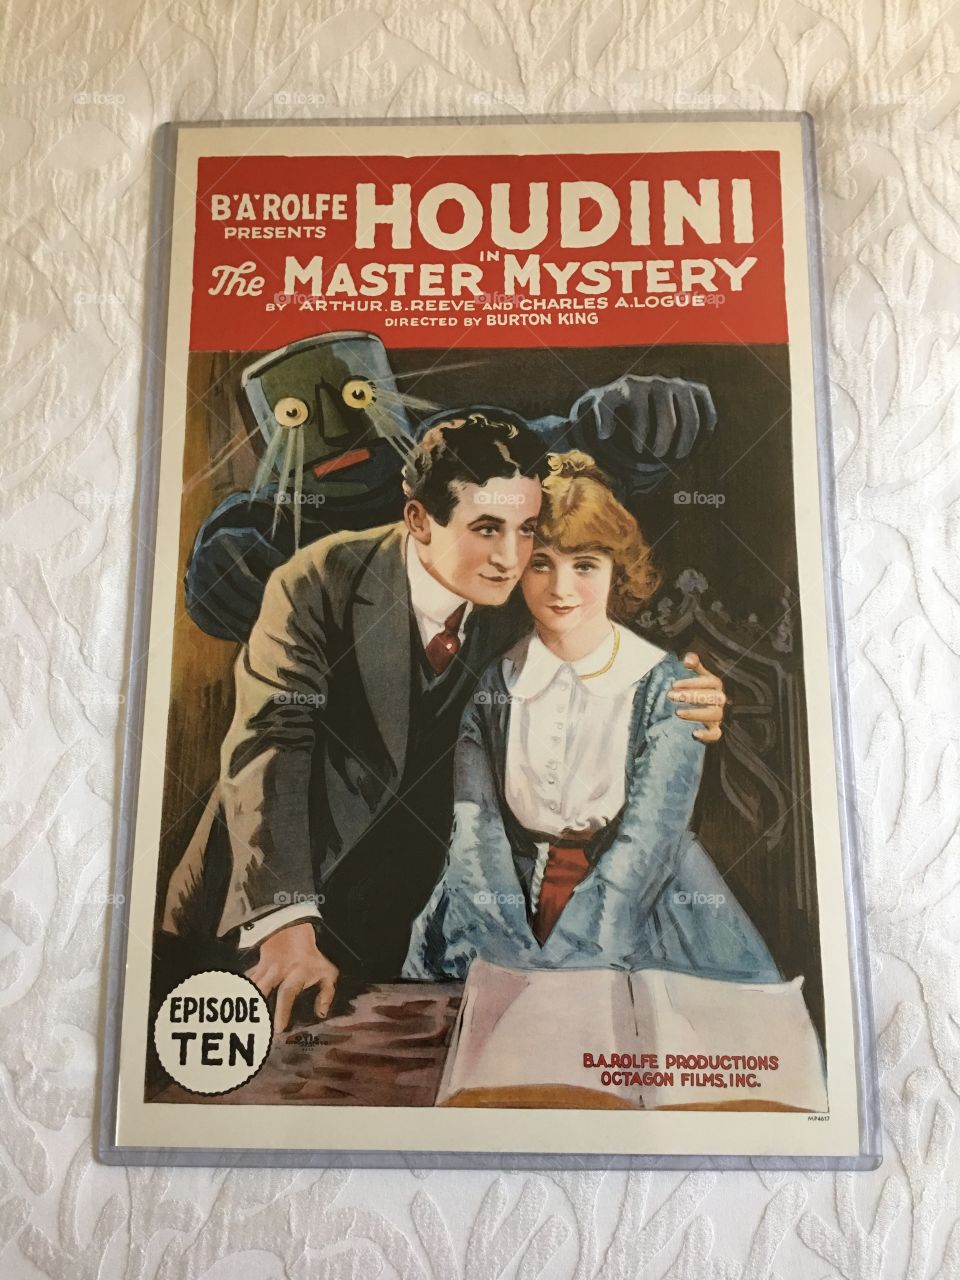 Houdini and his wife magic